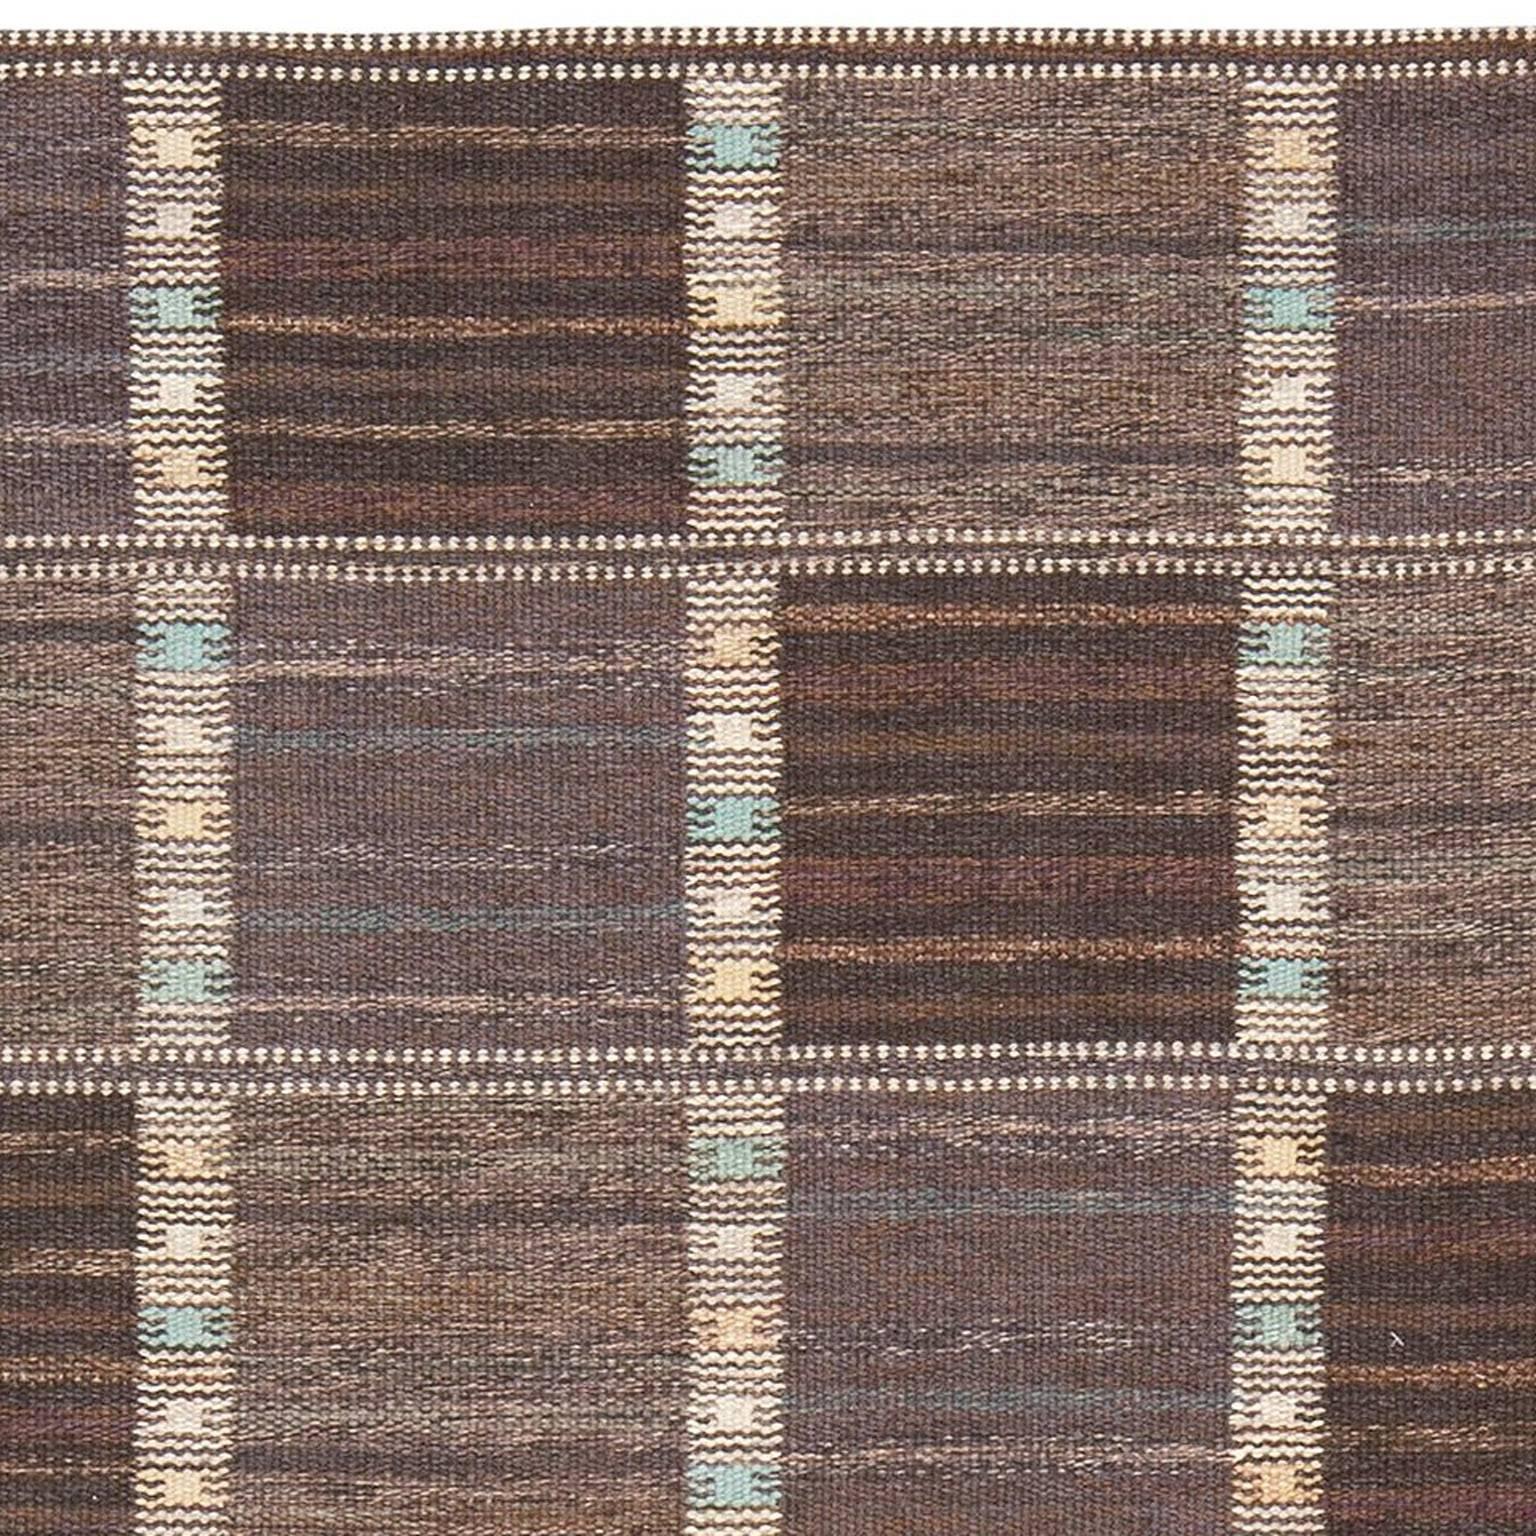 Swedish flat weave, initialed: AB MMF BN (AB Märta Måås-Fjetterström, Barbro Nilsson)
Provenance: Zoégas Kaffe, Nestlé Sverige AB